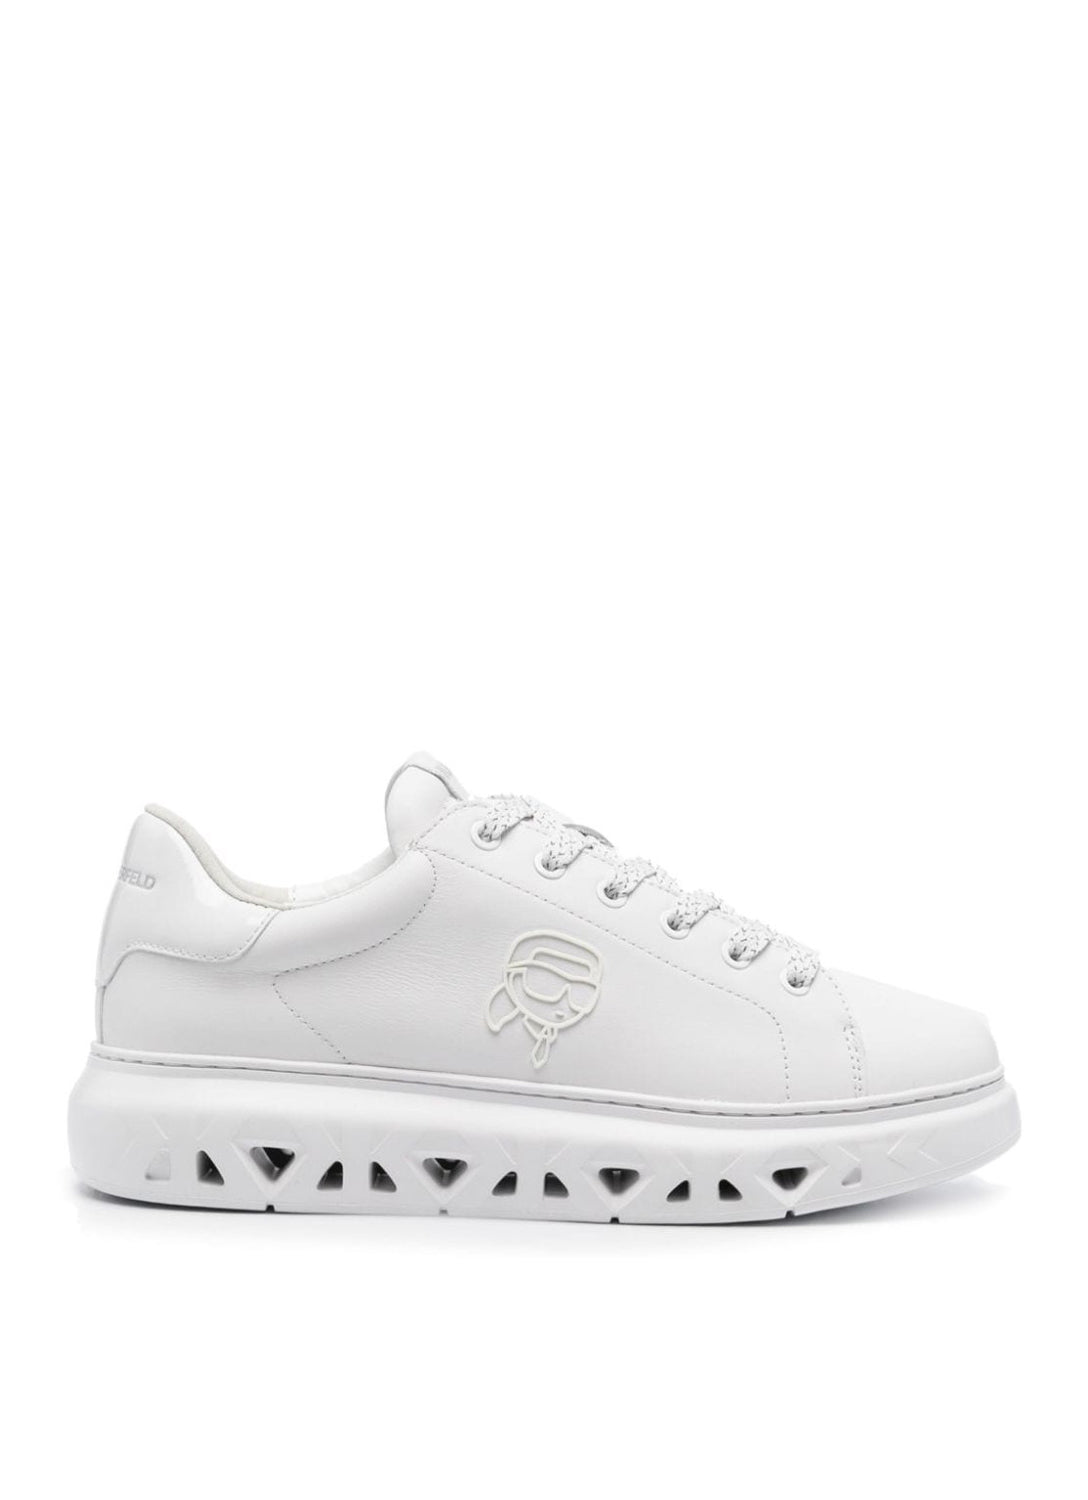 karl-lagerfeld-sapatilhas-sneakers-shoes-kl54530-white-branco_shot3